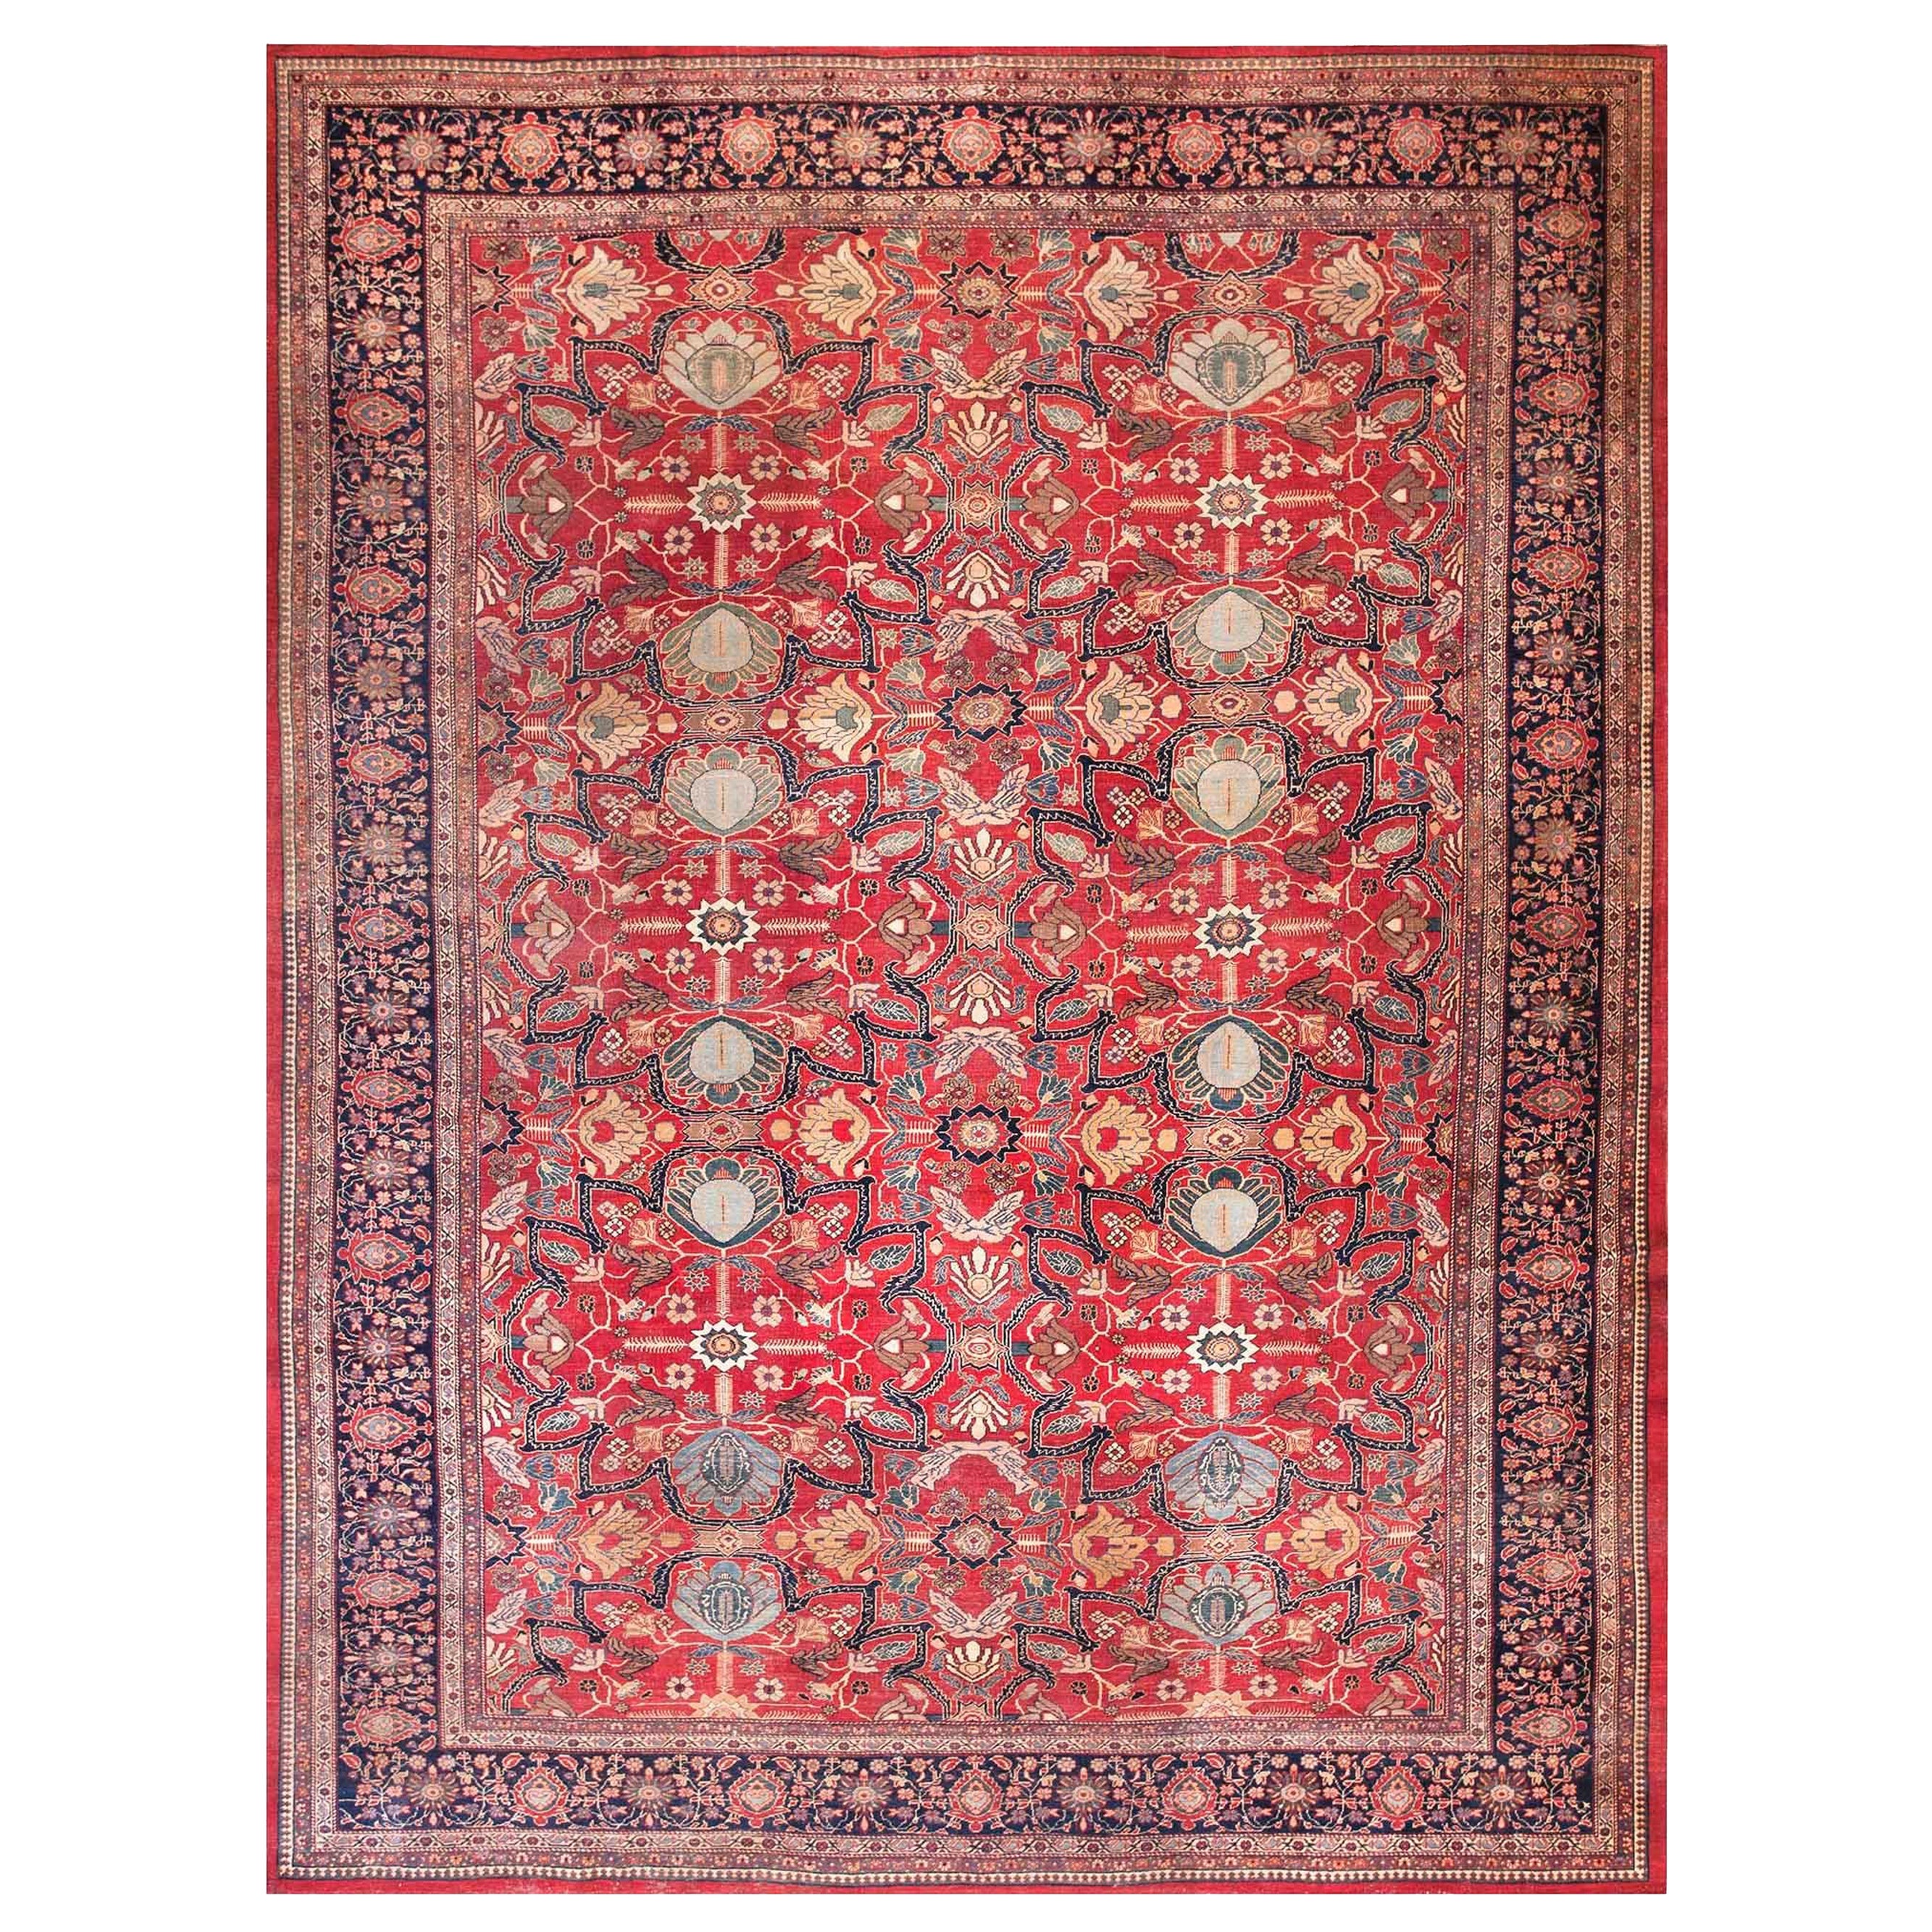 19th Century Persian Sarouk Farahan Carpet ( 8' 8" x 11' 8" - 265 x 355 cm )